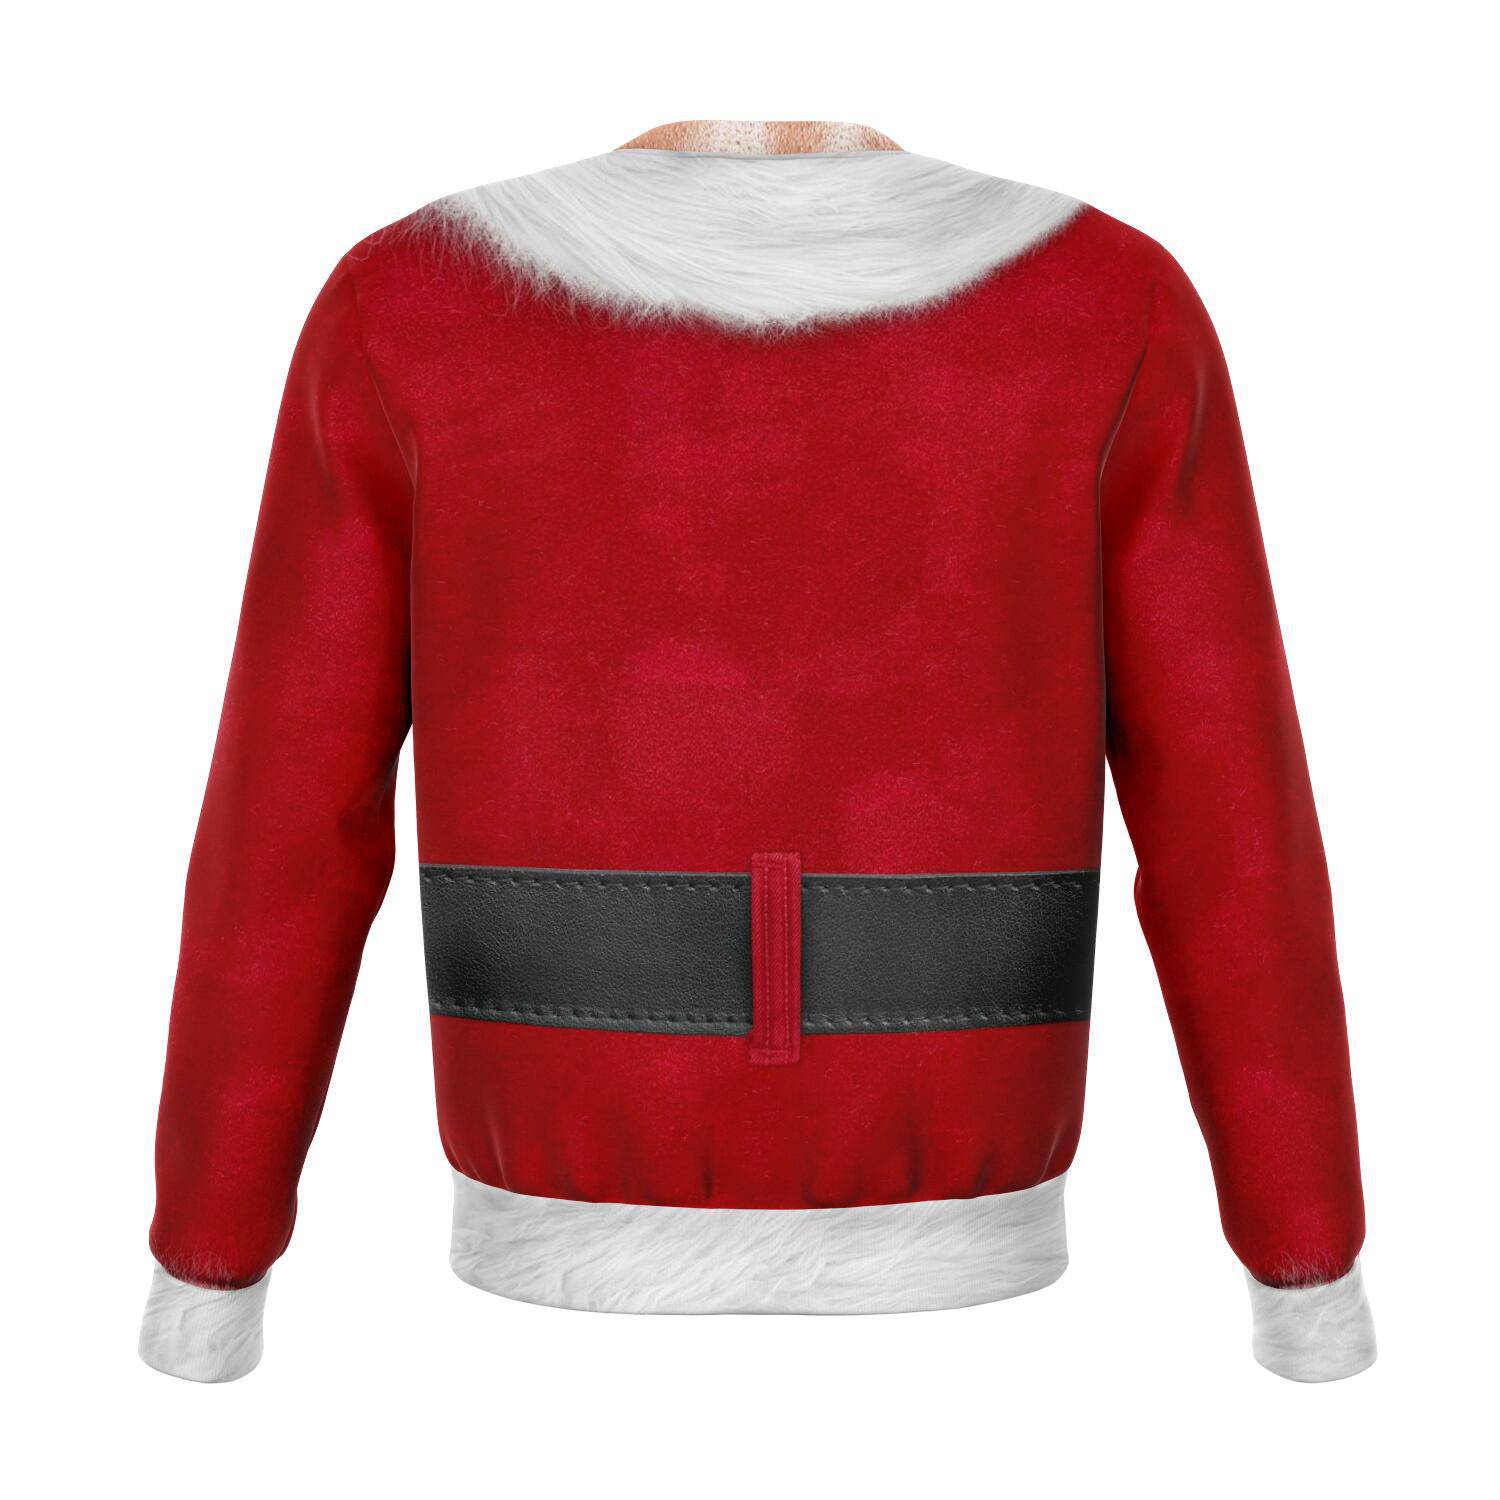 Santa Muscle Shirt Ugly Christmas Sweater Order By December 5 - Powderaddicts